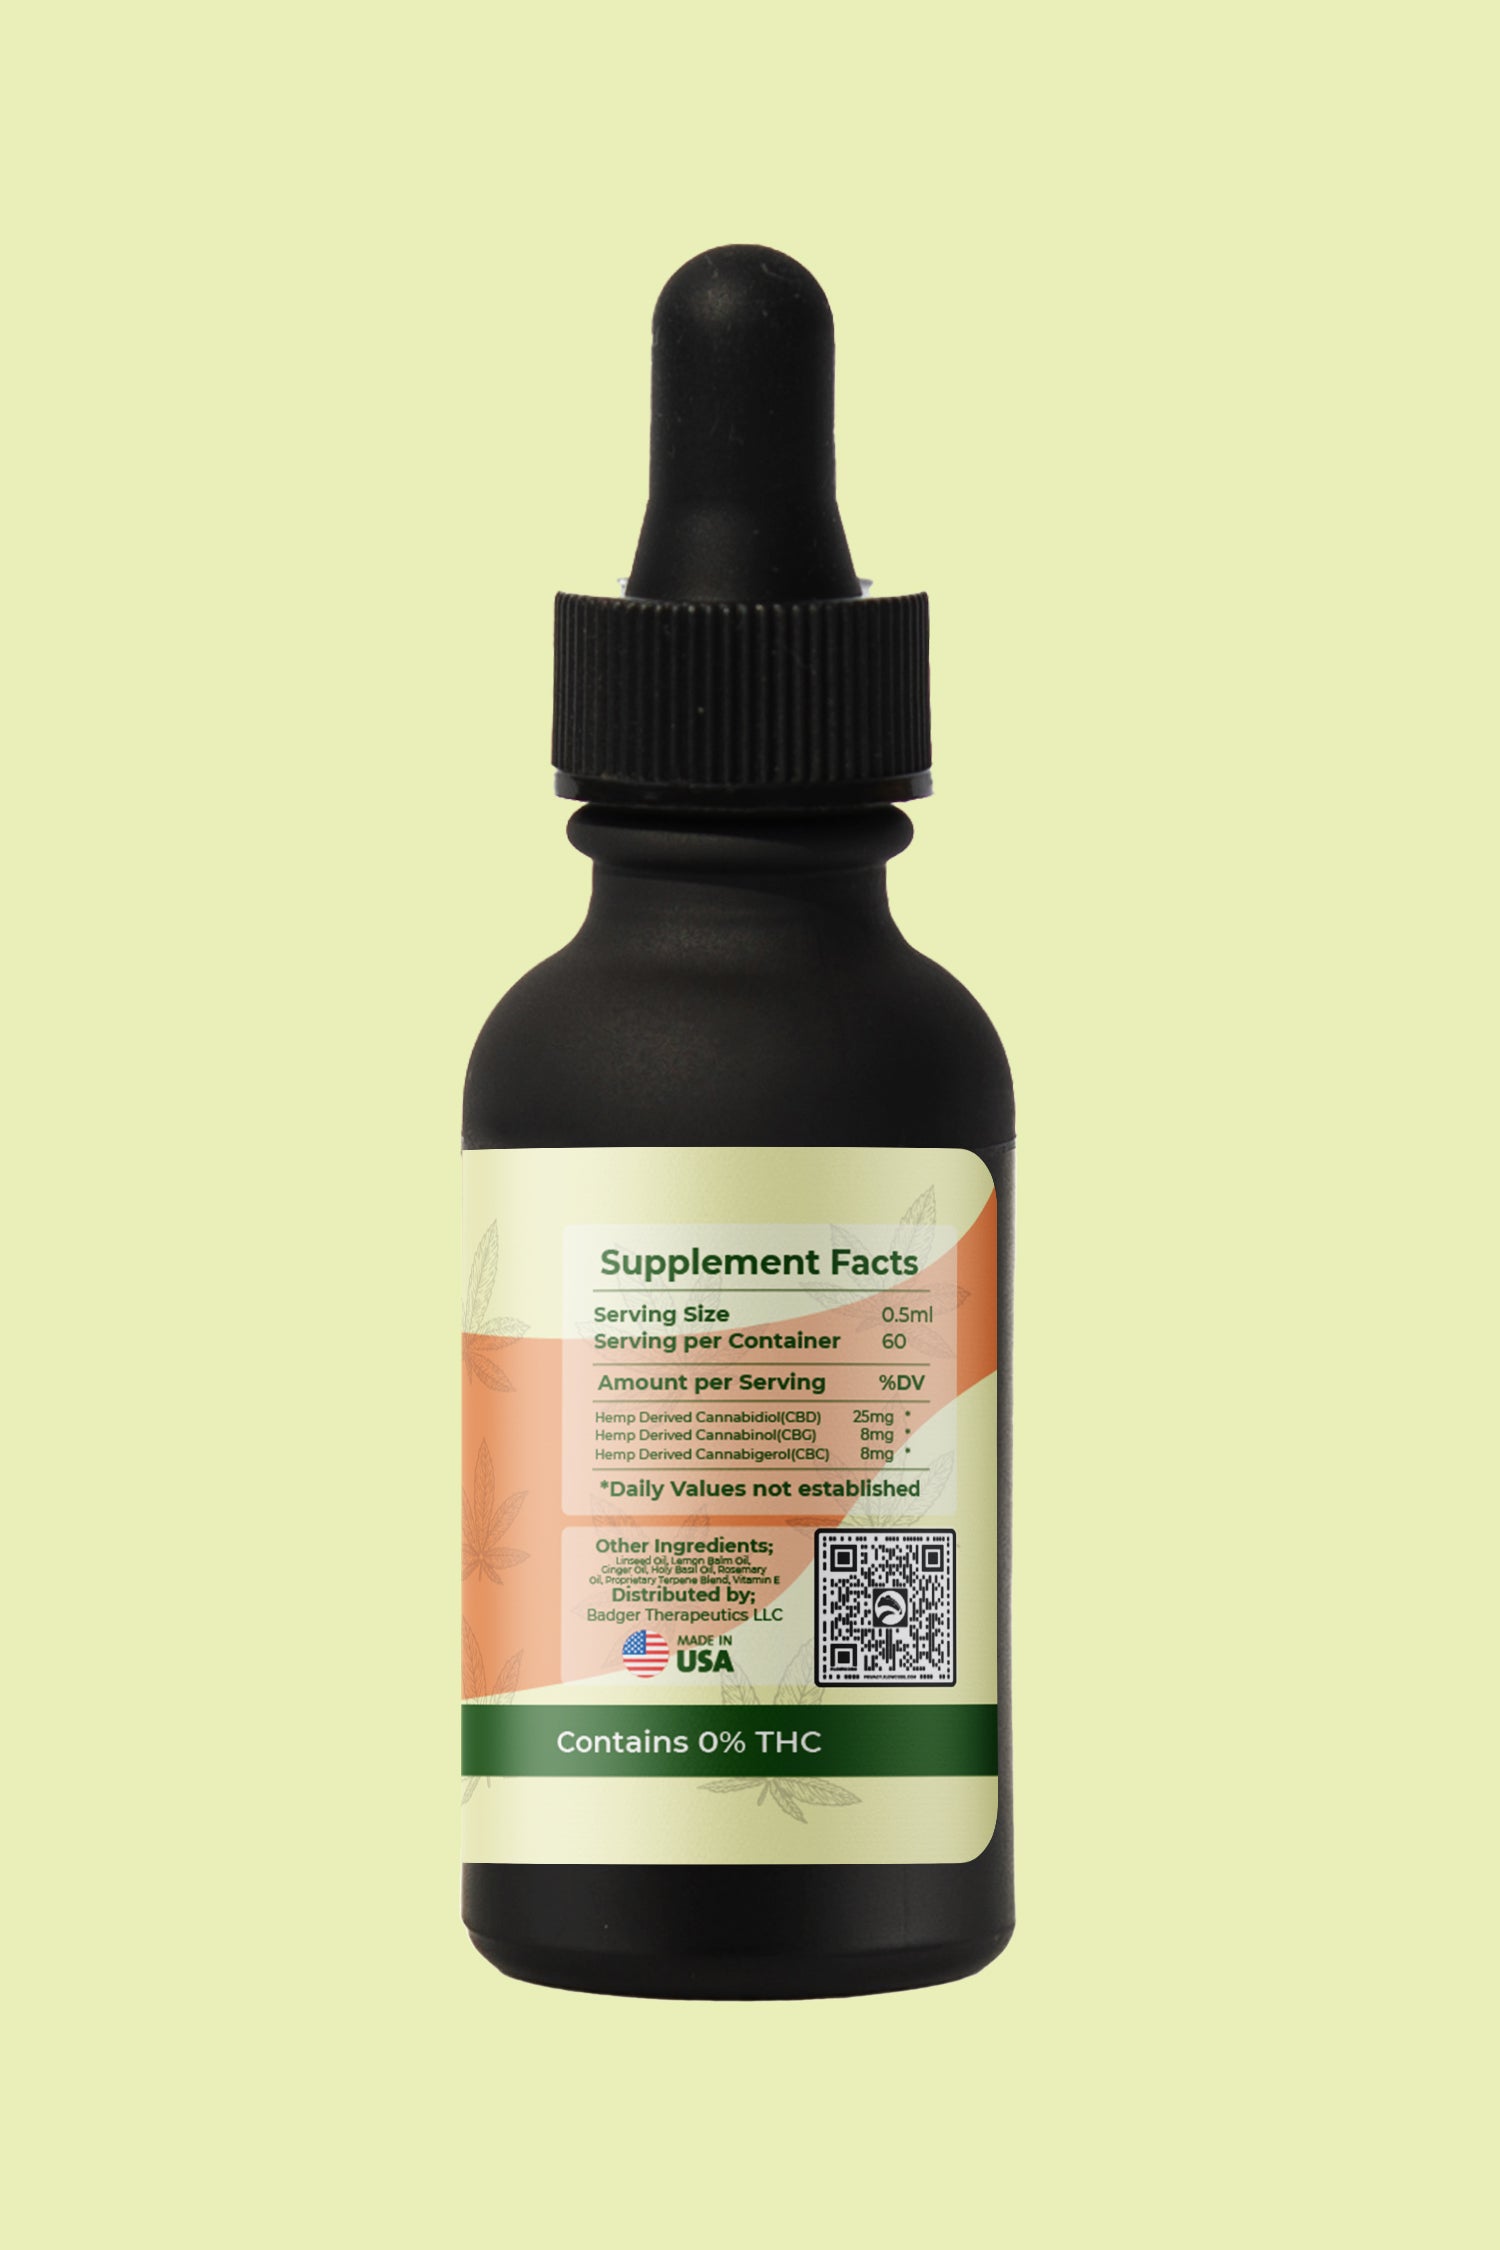 Badger Therapeutics Anti Inflammatory CBD Oil with 1500 mg CBD